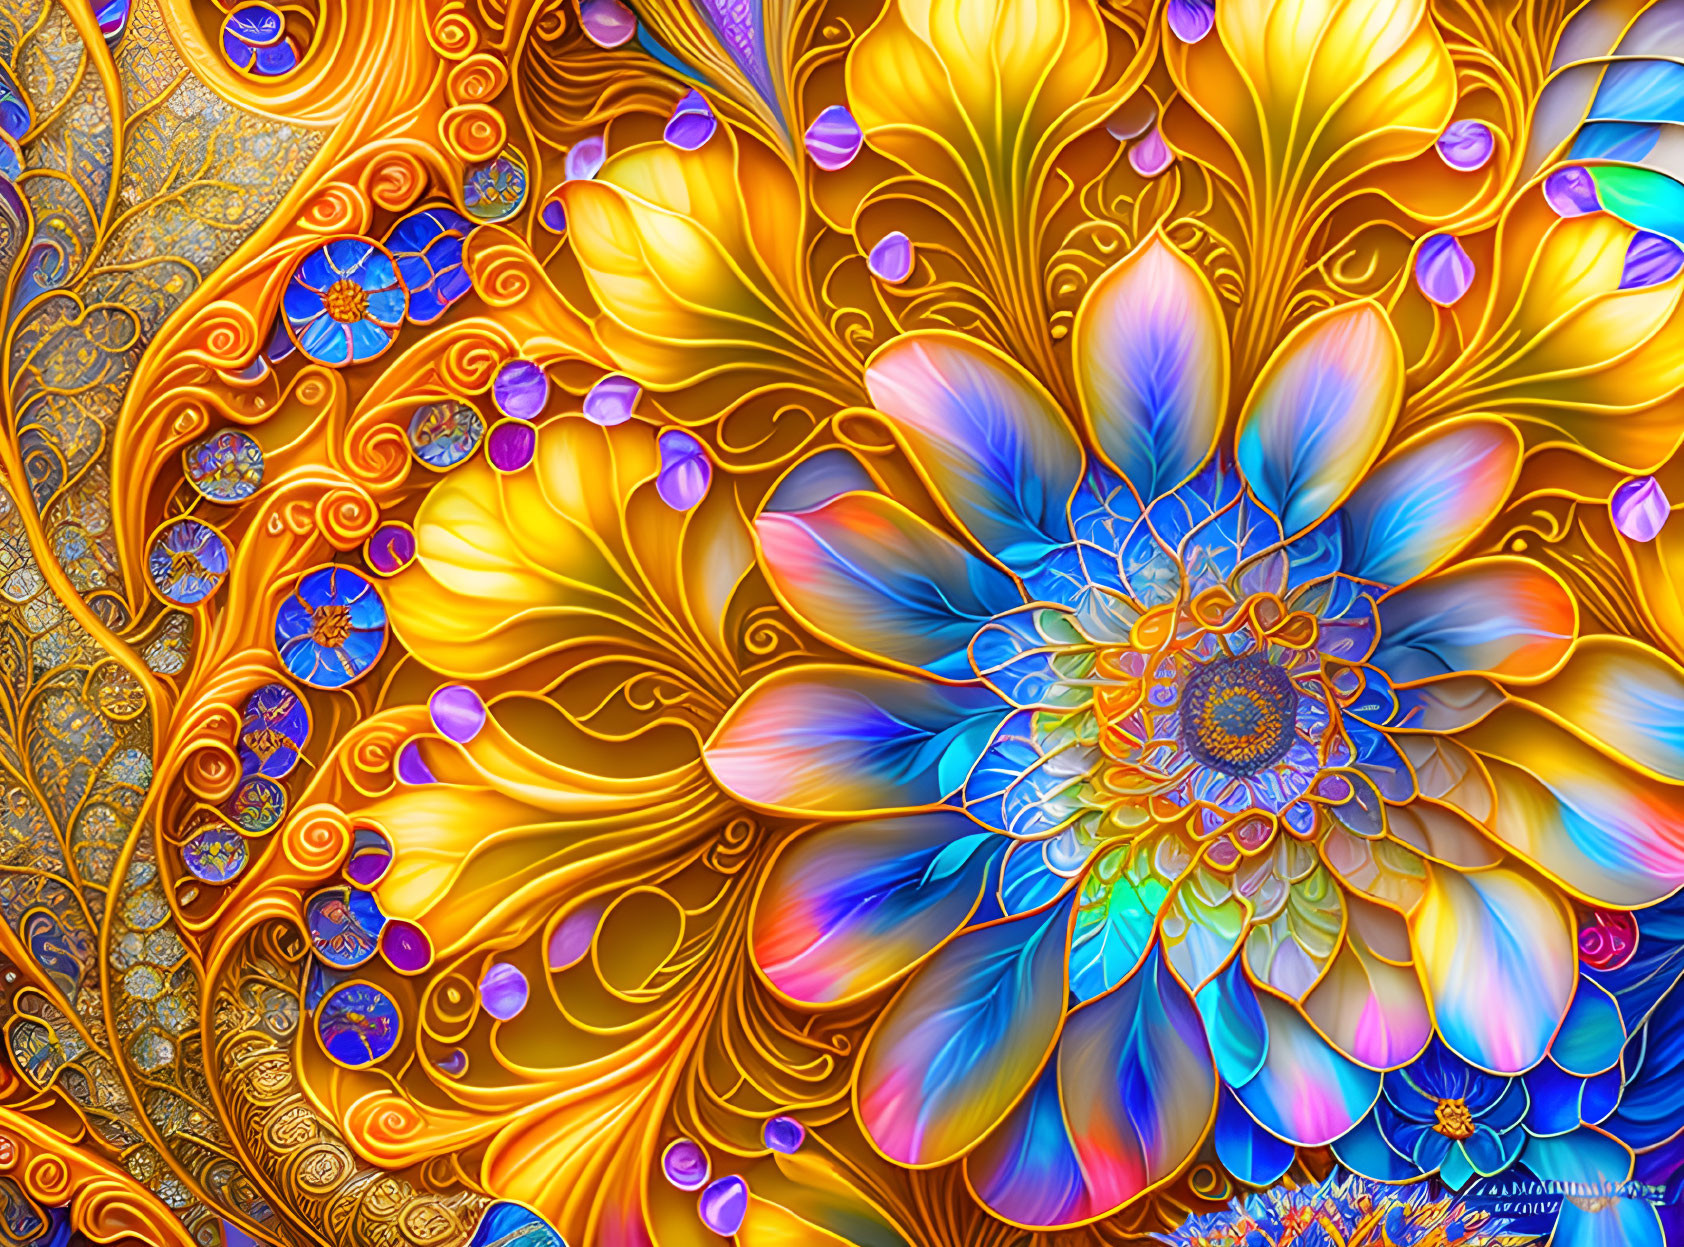 Colorful digital artwork: ornate fractal patterns in jewel tones